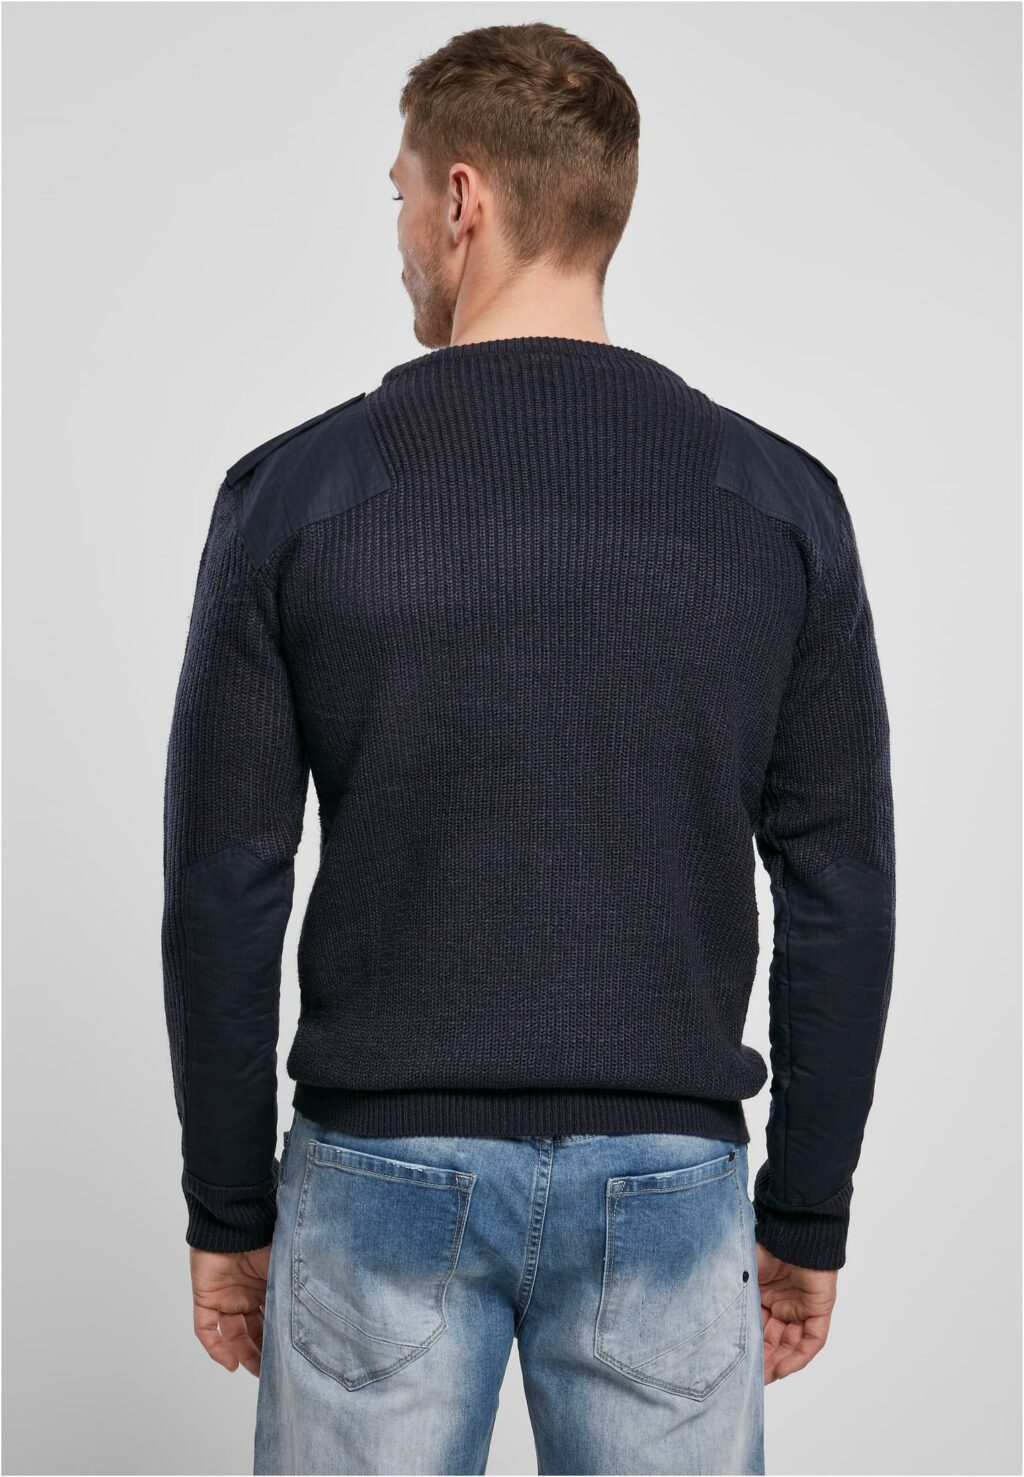 Brandit Military Sweater navy BD5018